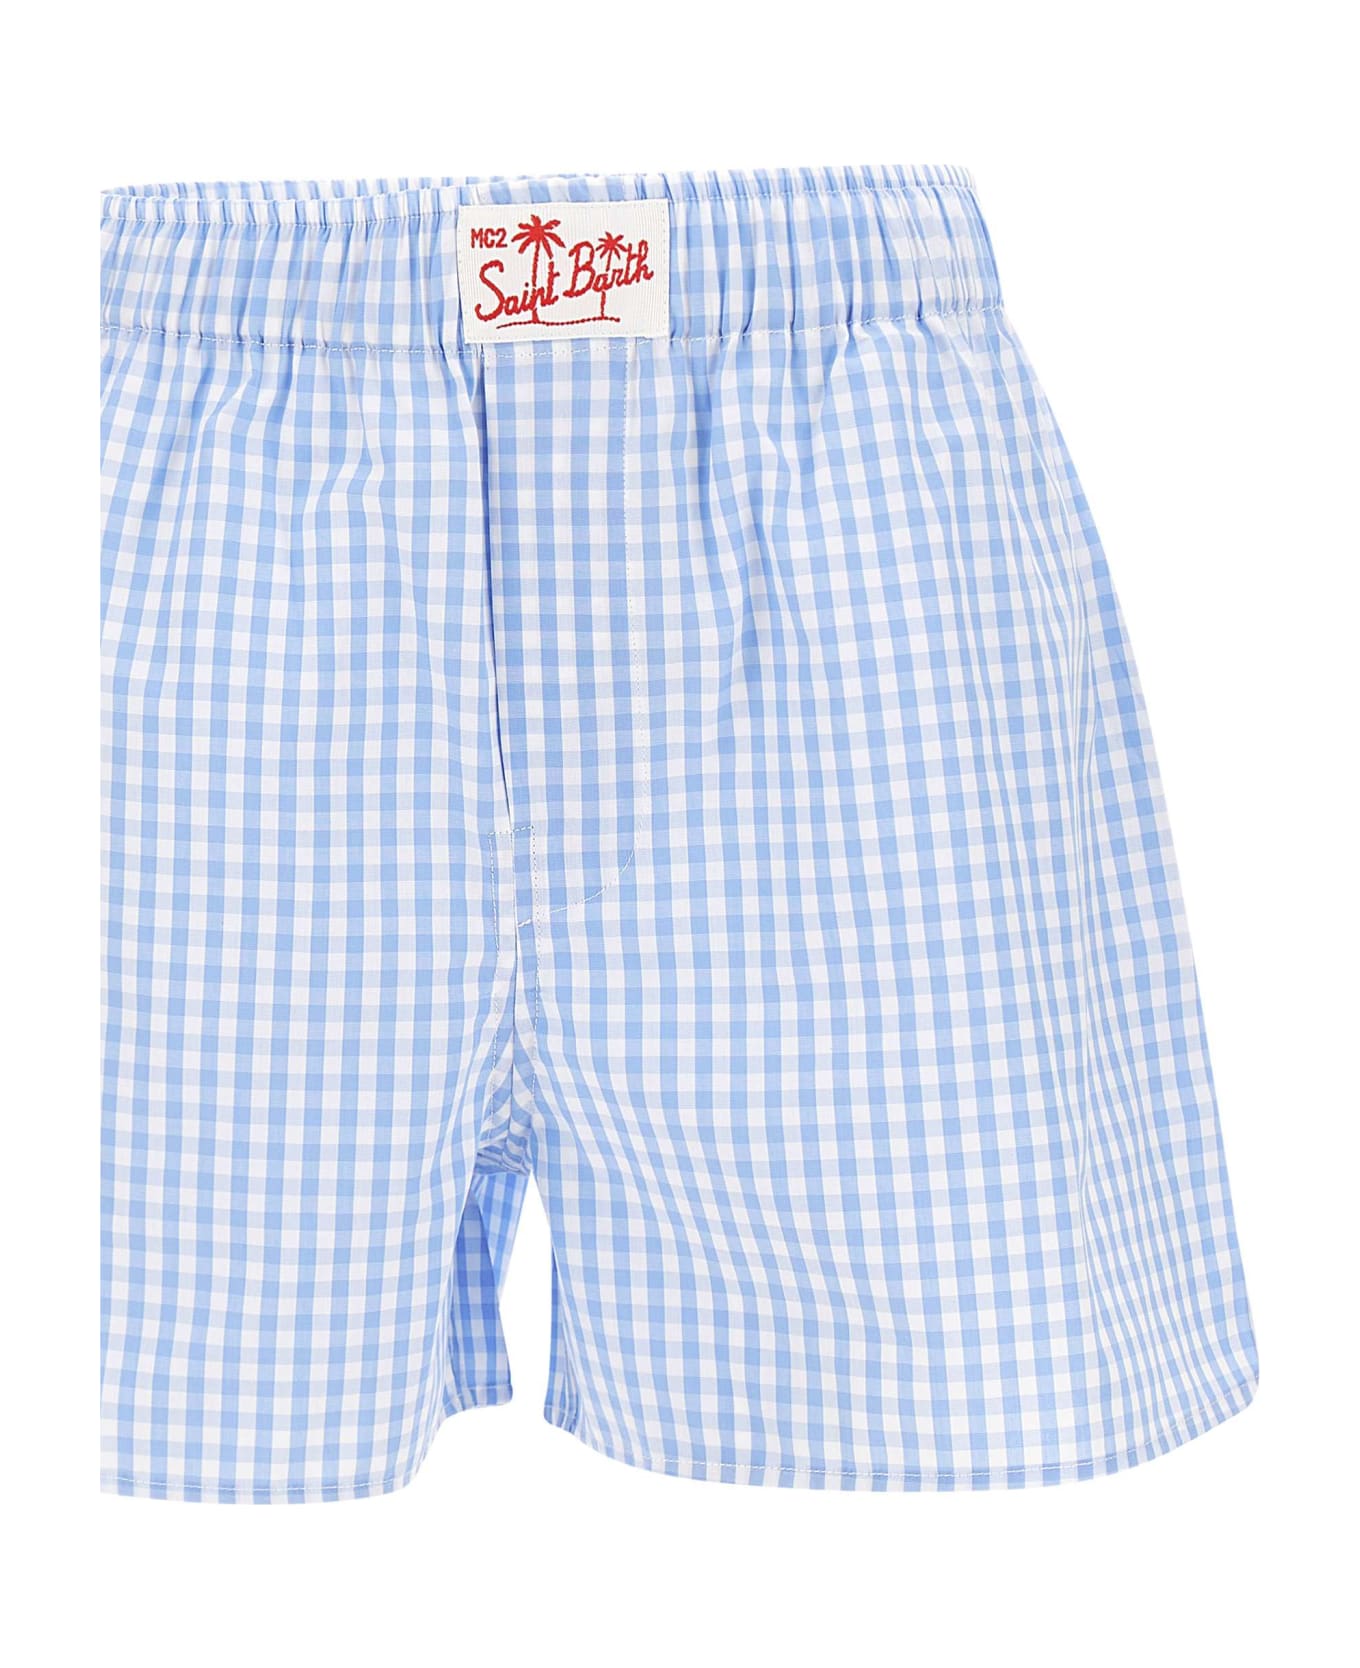 MC2 Saint Barth "boxy" Cotton Shorts - Light Blue/white